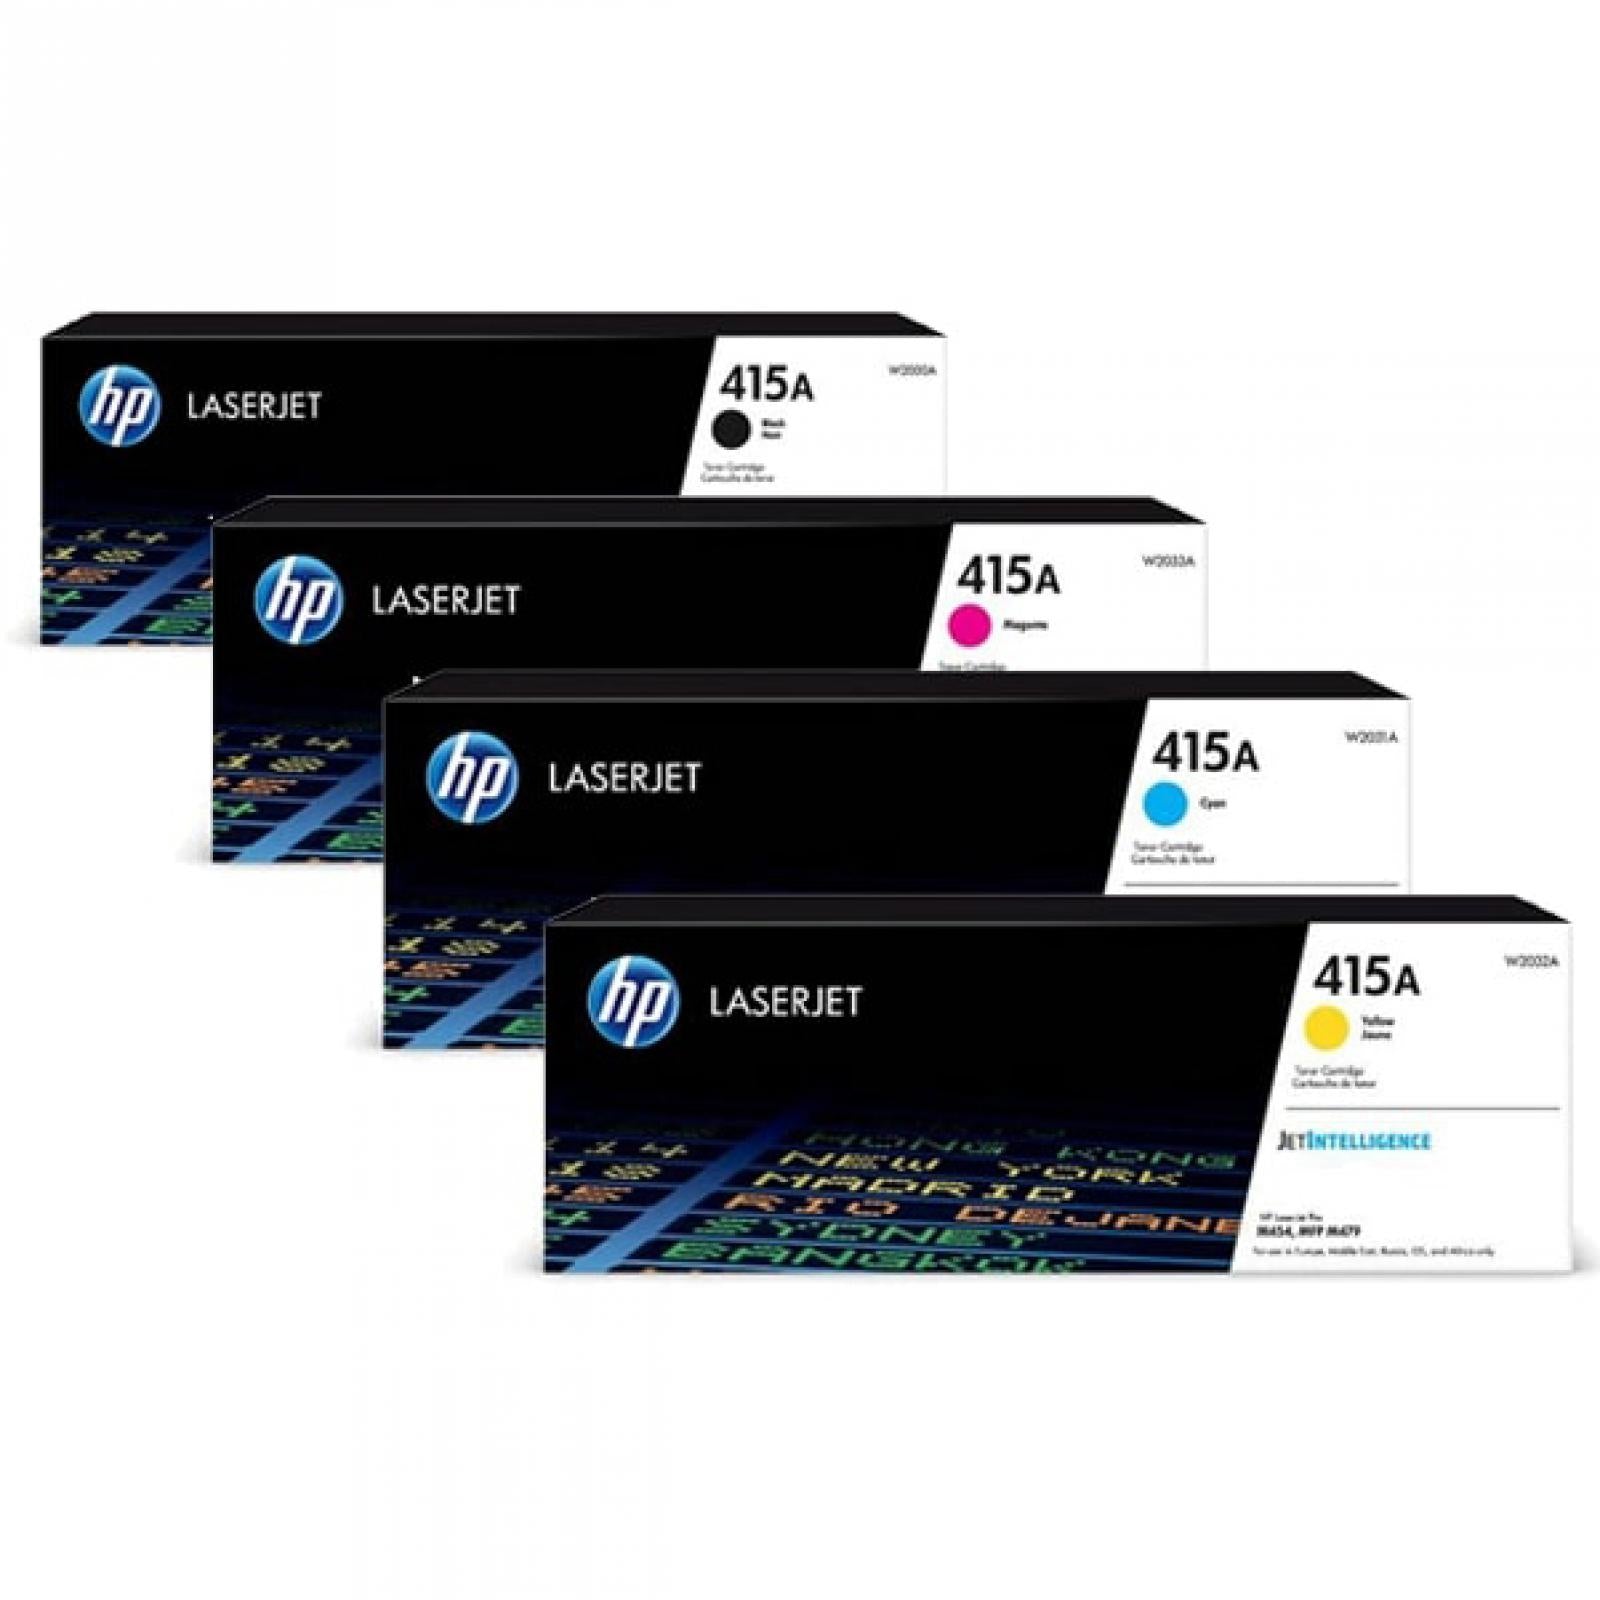 HP 415A Toner Cartridges set for HP Color LaserJet Pro M454 MFP M479